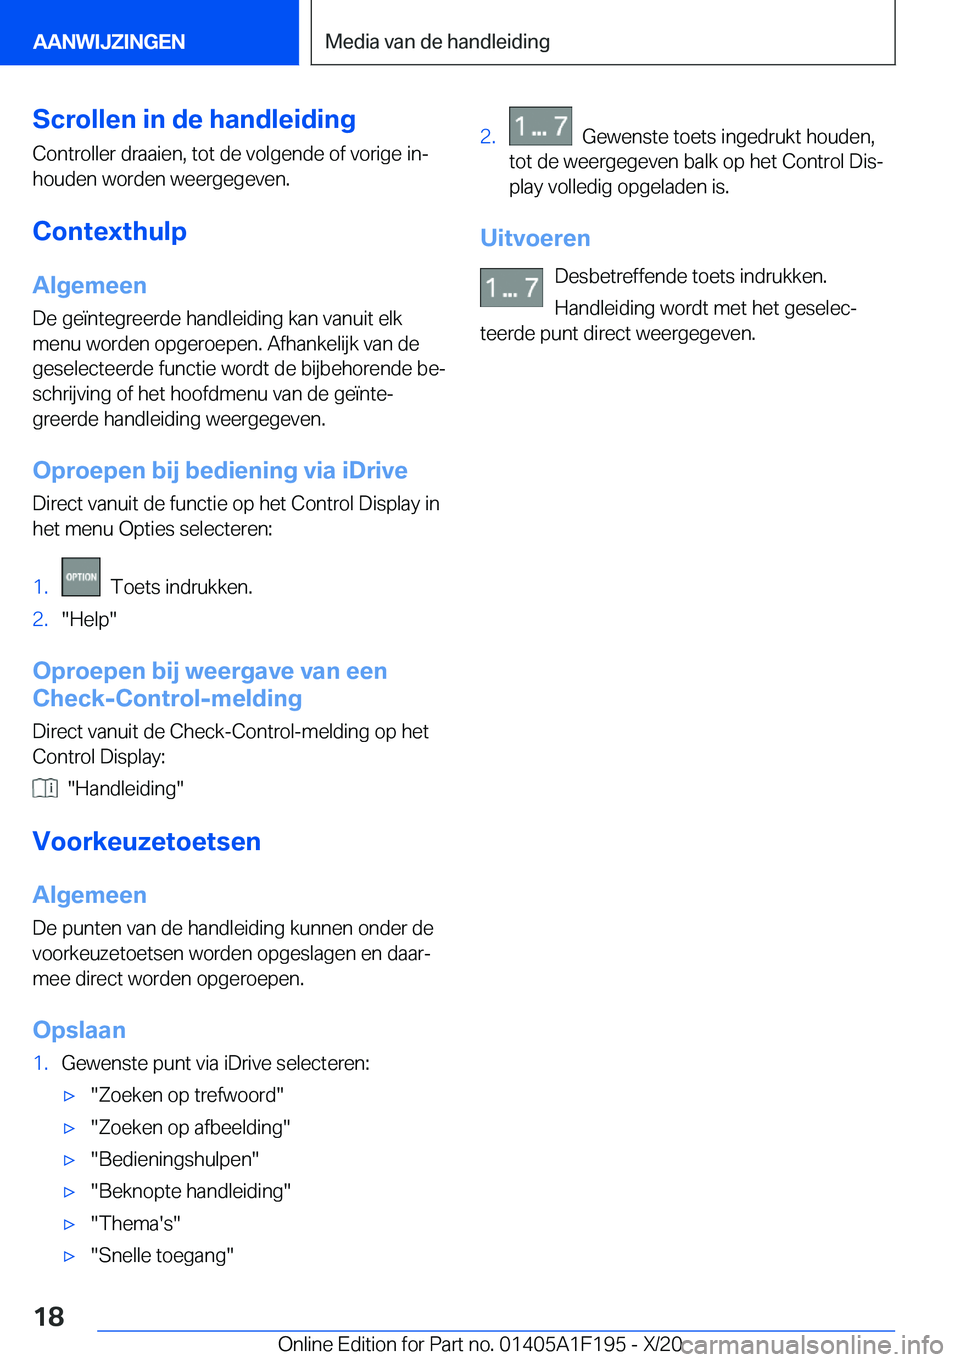 BMW M5 2021  Instructieboekjes (in Dutch) �S�c�r�o�l�l�e�n��i�n��d�e��h�a�n�d�l�e�i�d�i�n�g
�C�o�n�t�r�o�l�l�e�r��d�r�a�a�i�e�n�,��t�o�t��d�e��v�o�l�g�e�n�d�e��o�f��v�o�r�i�g�e��i�nj
�h�o�u�d�e�n��w�o�r�d�e�n��w�e�e�r�g�e�g�e�v�e